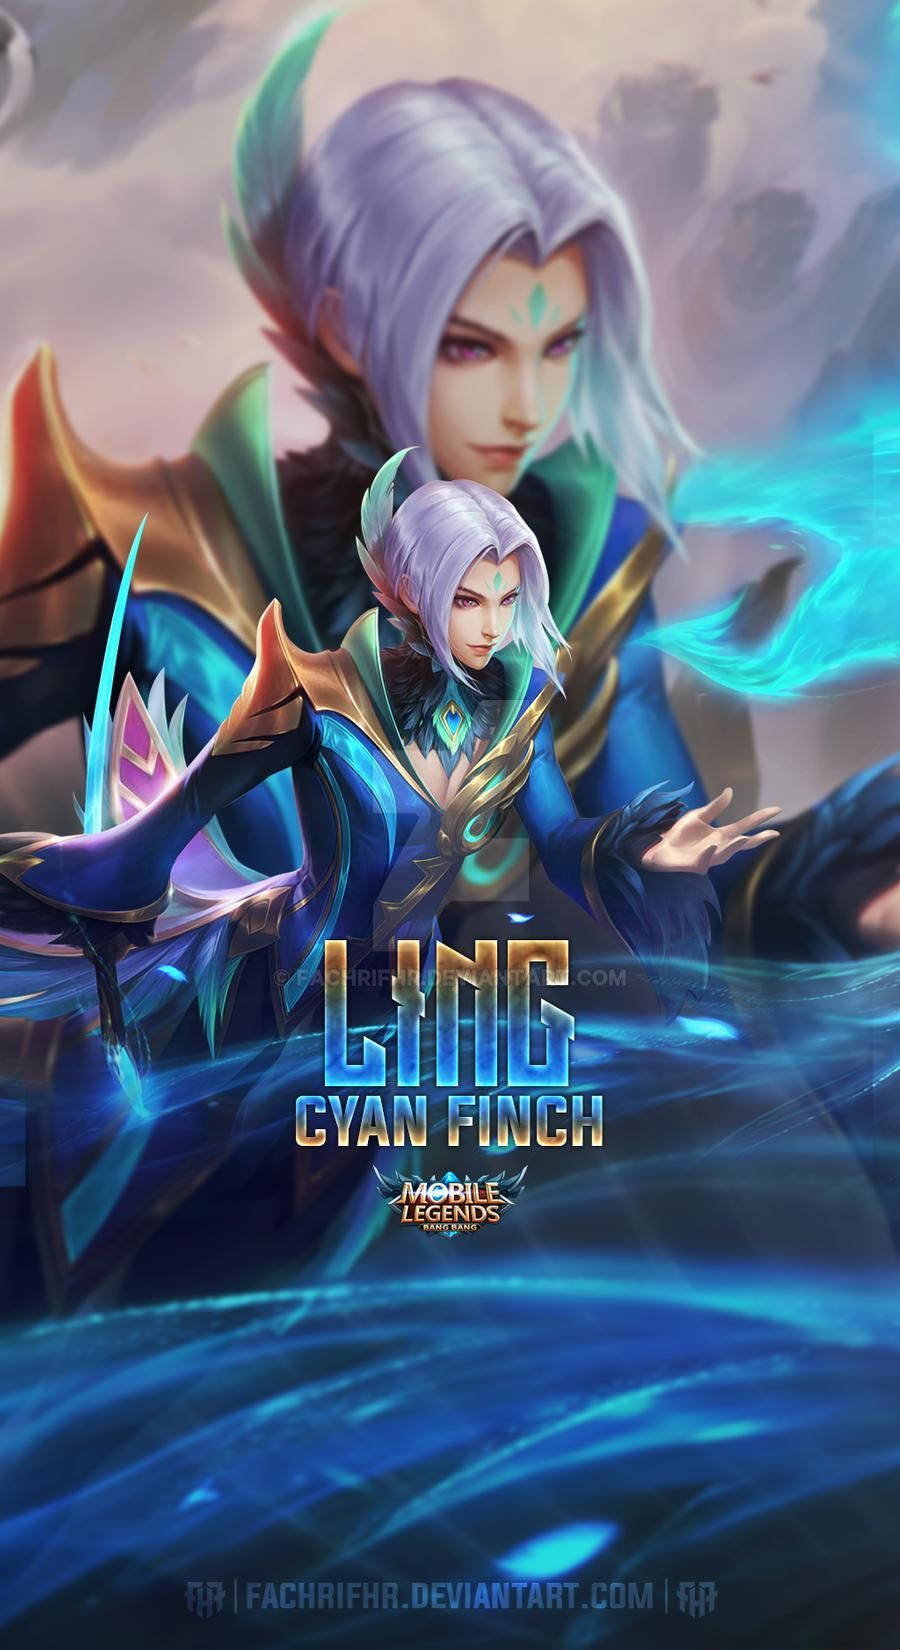 Ling Mobile Legends Cyan Finch Poster Wallpaper